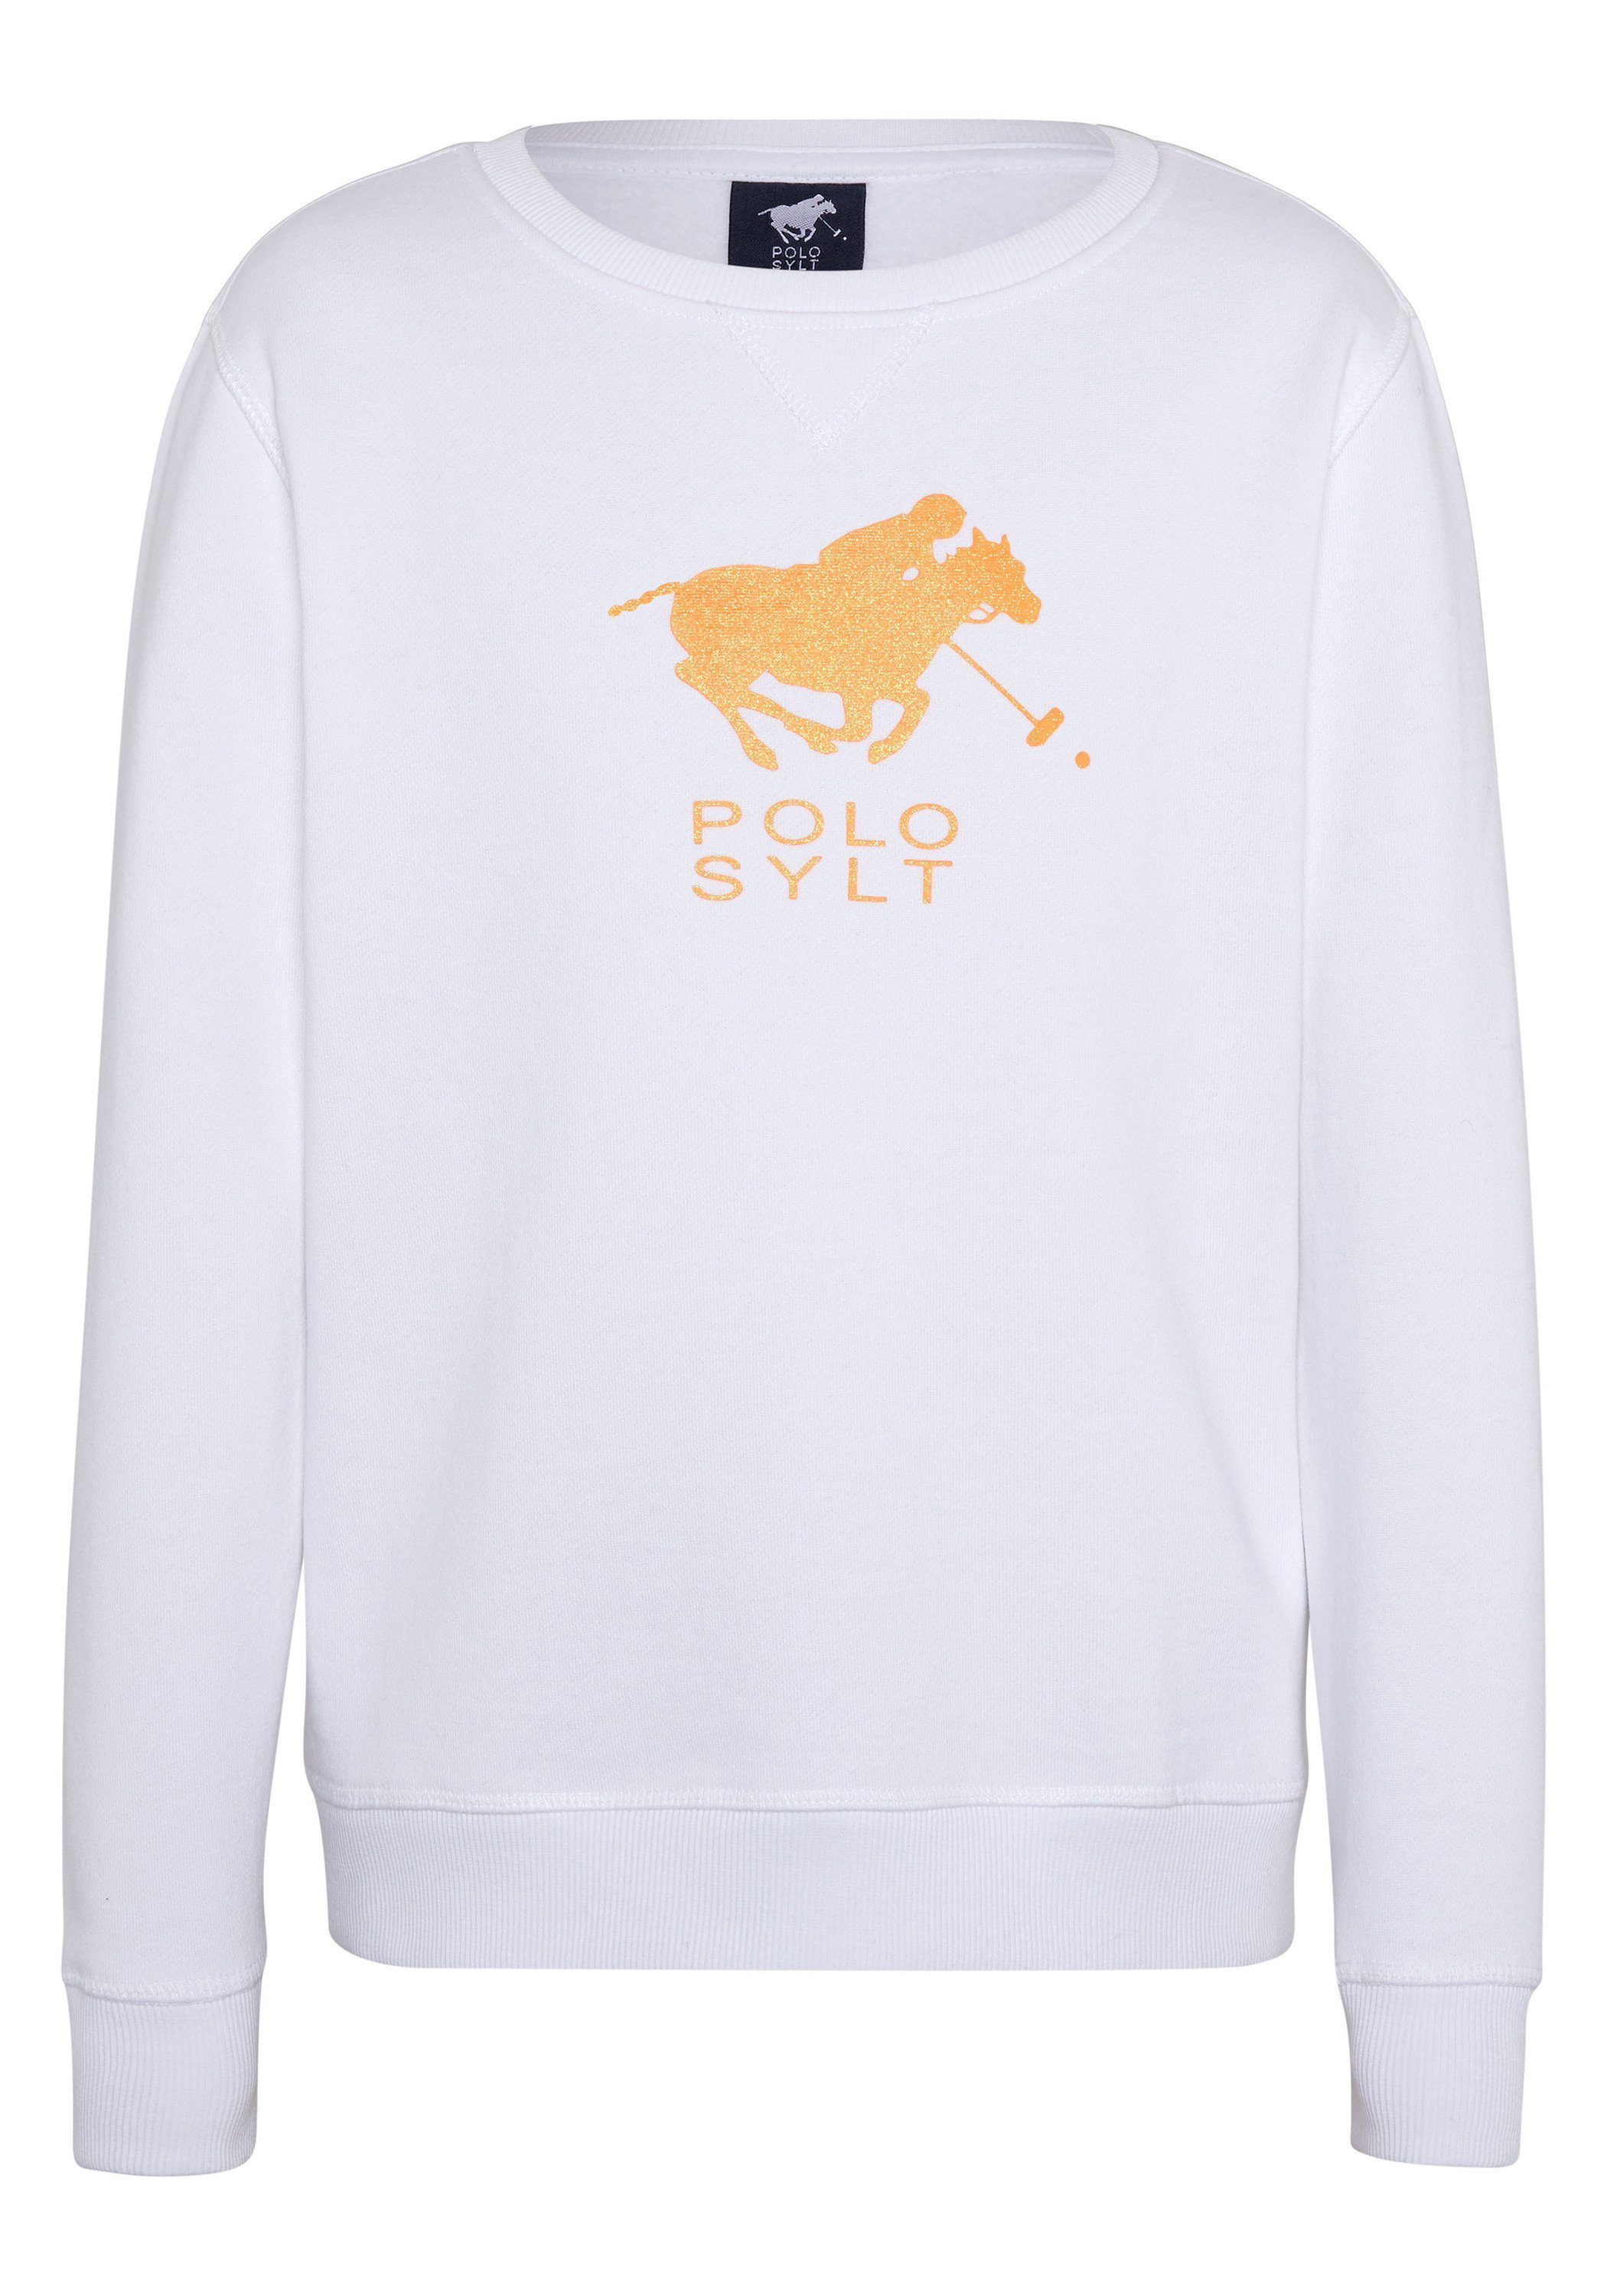 Polo Sylt Sweatshirt mit Glitzer-Label-Print Bright White